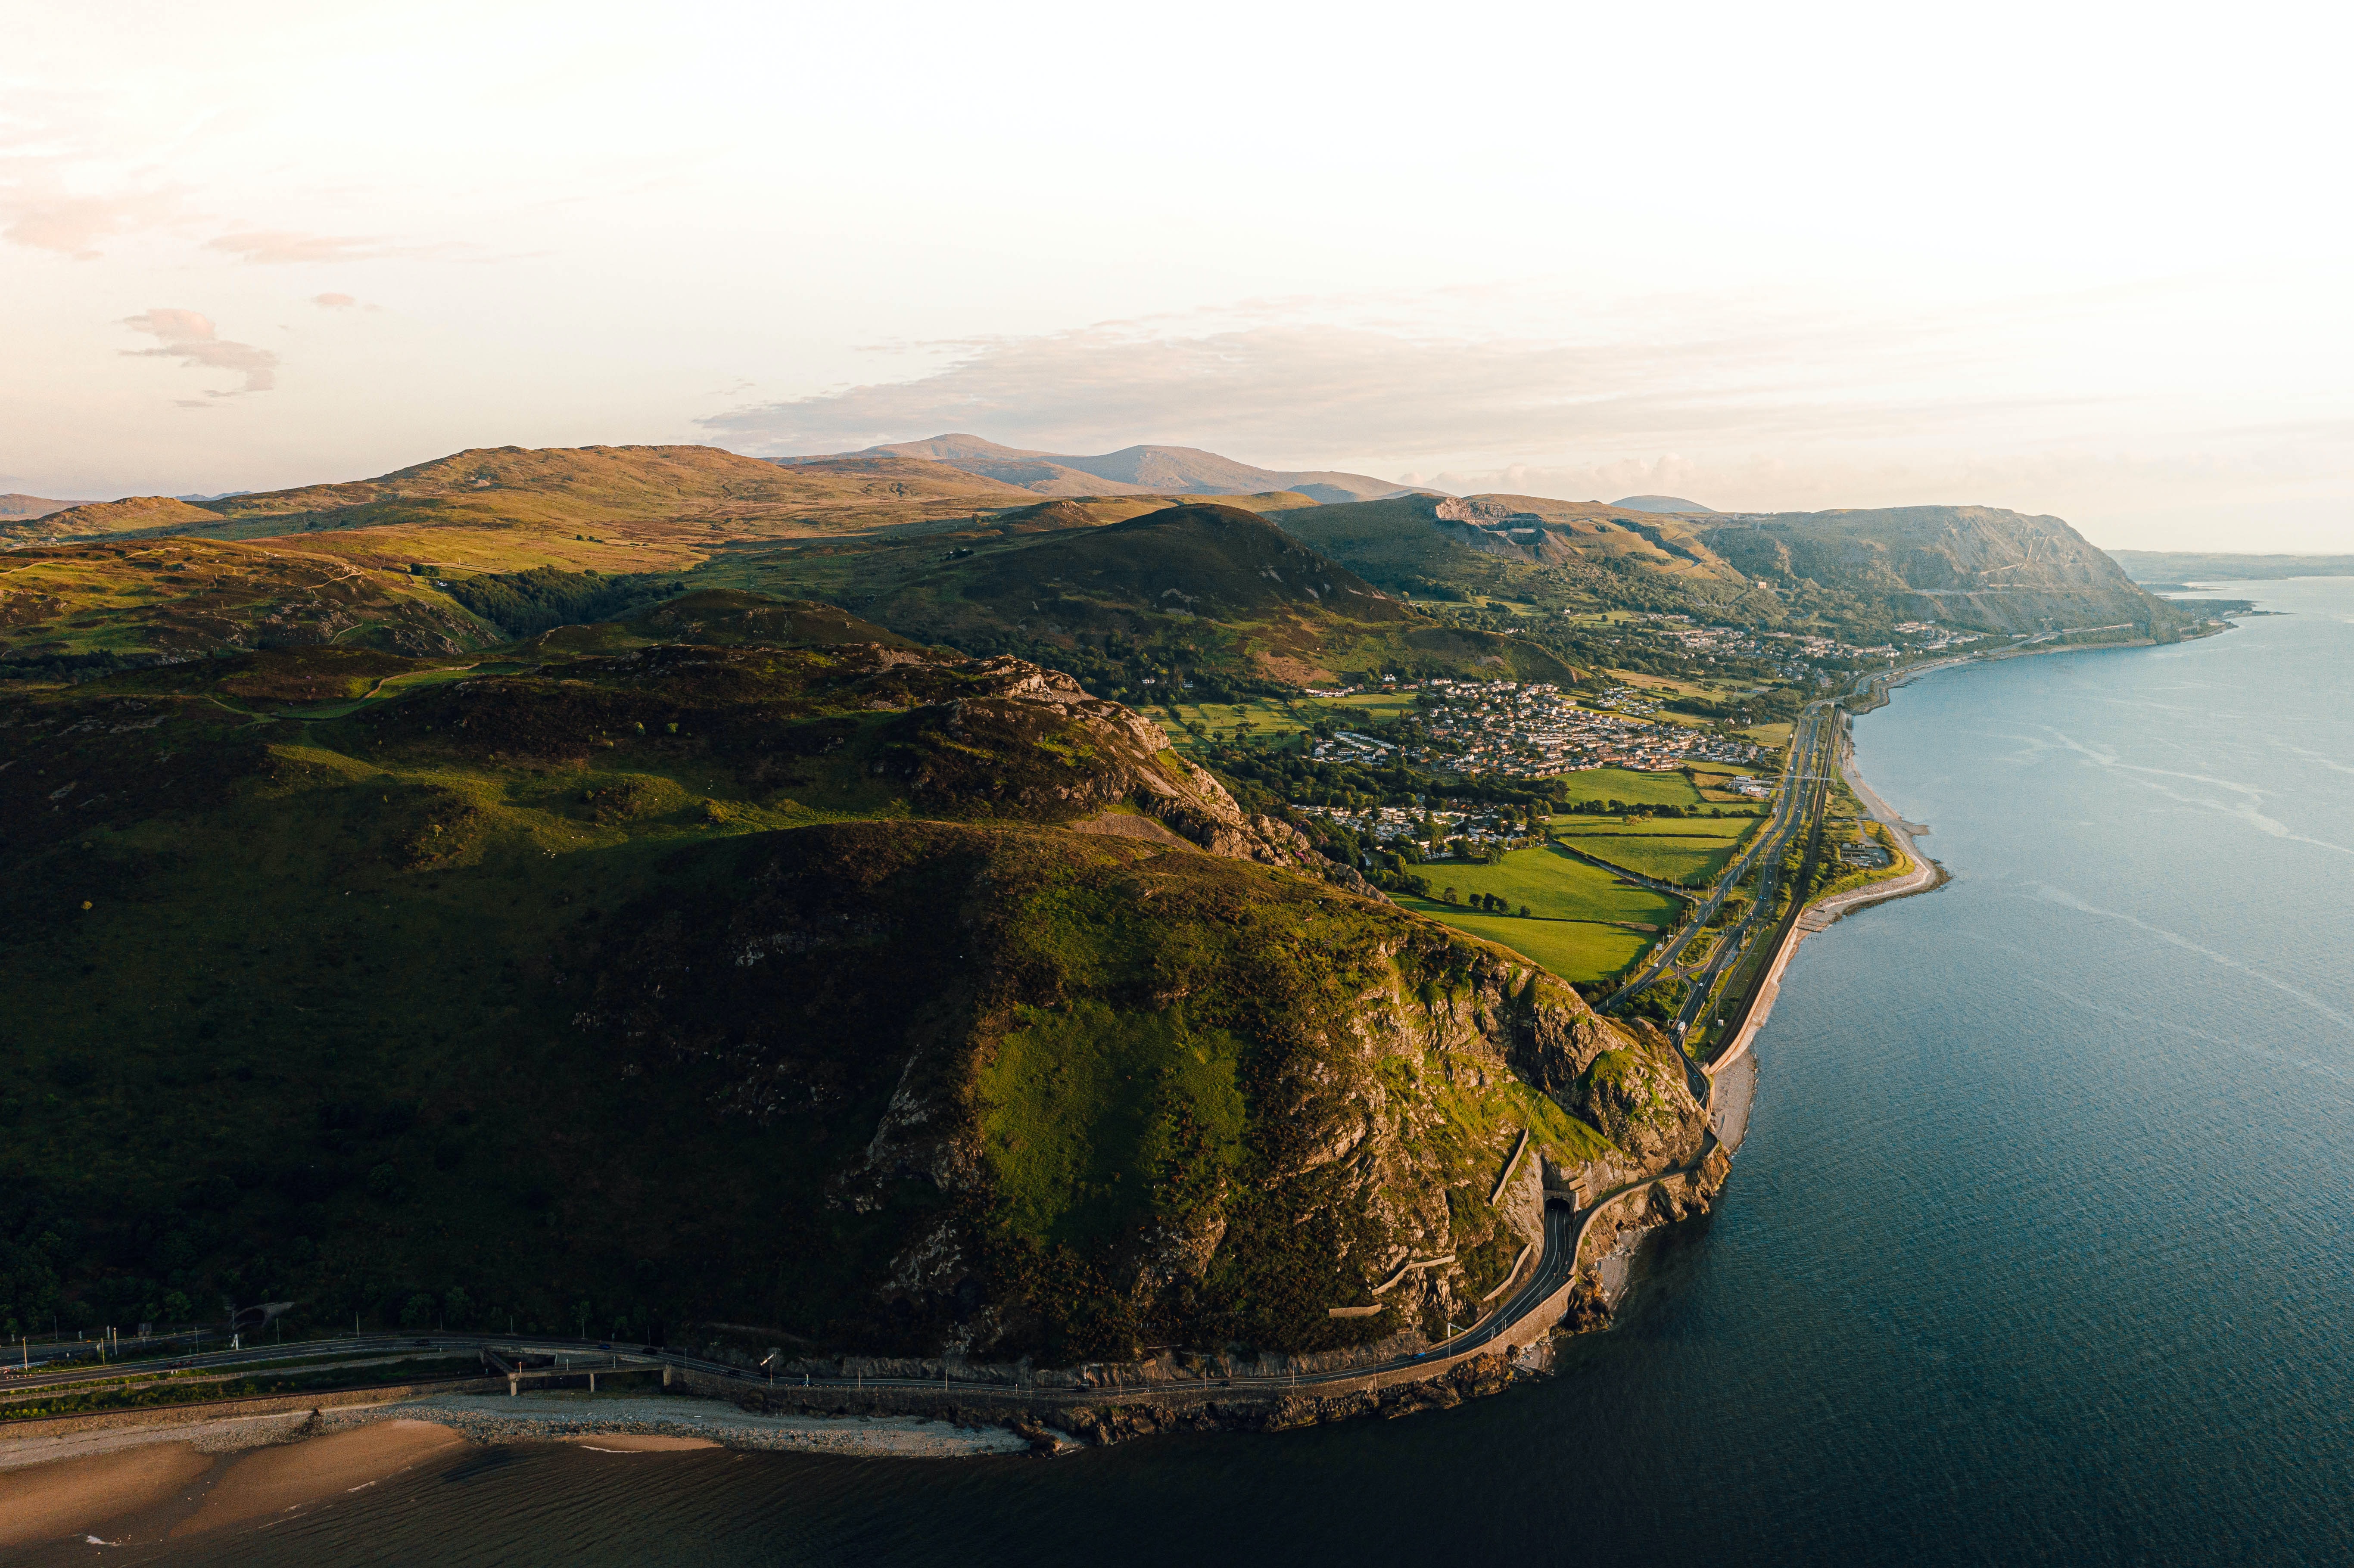 An aerial shot of North Wales coastline